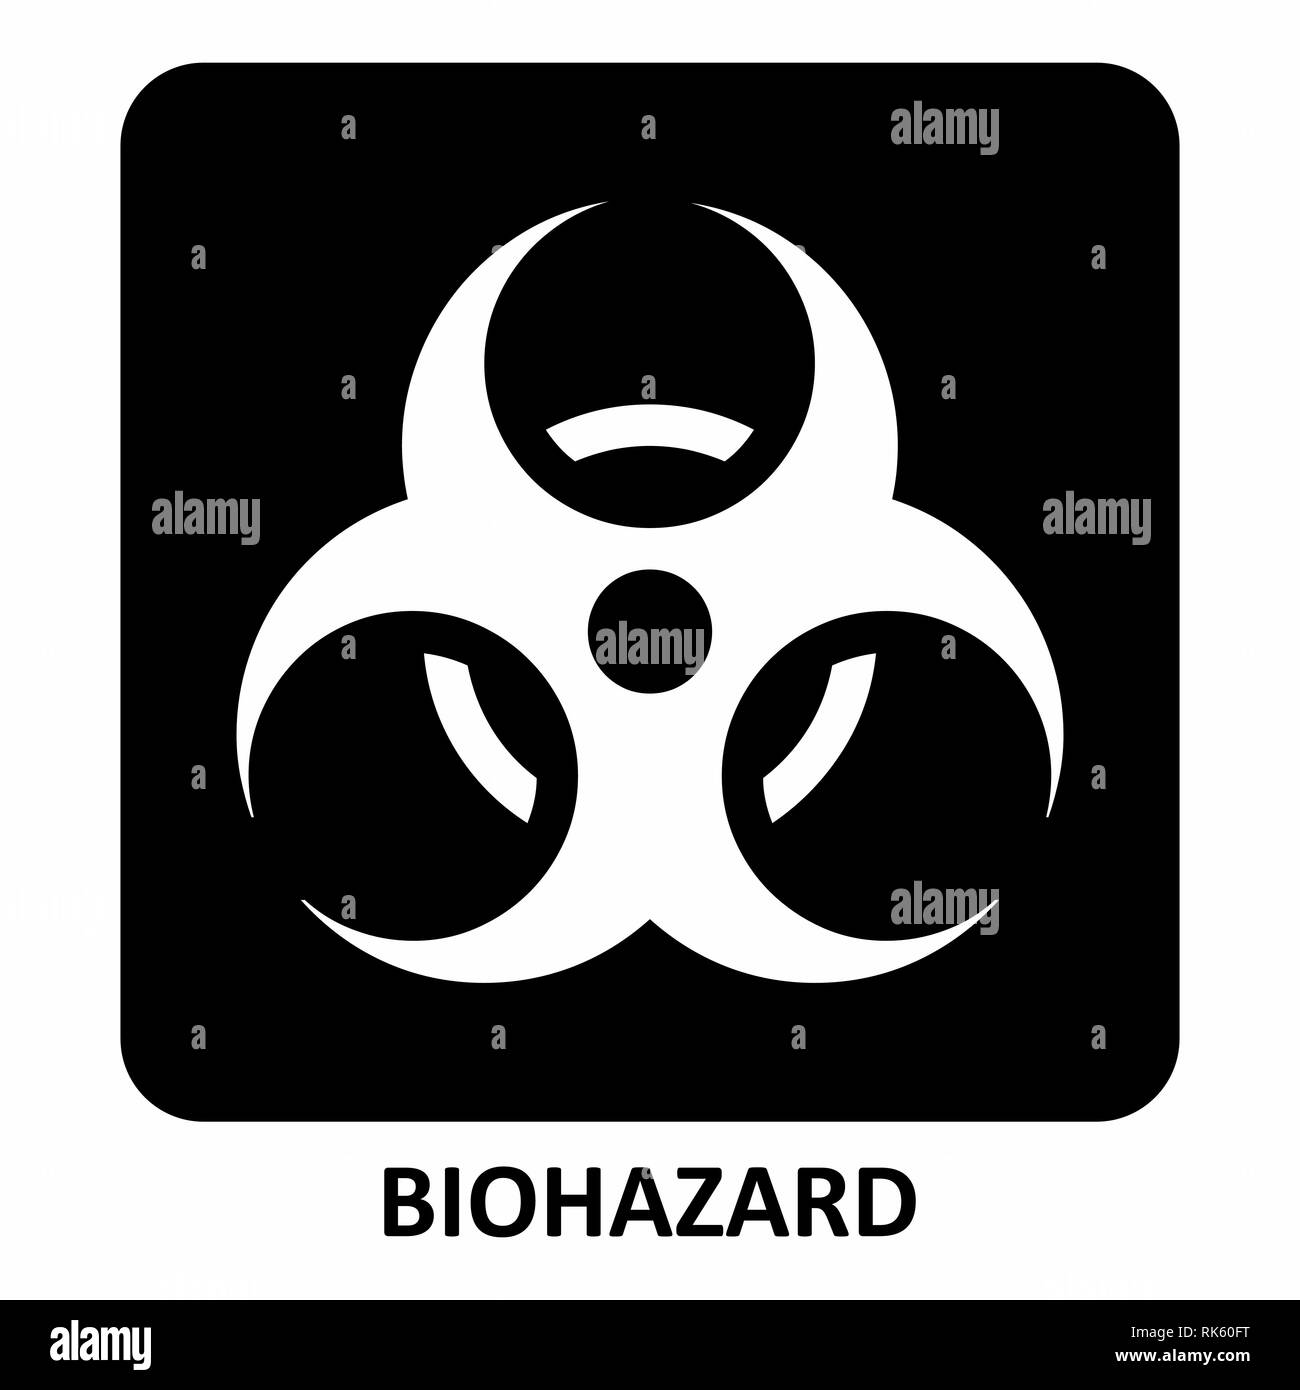 The black and white Biohazard symbol illustration Stock Vector